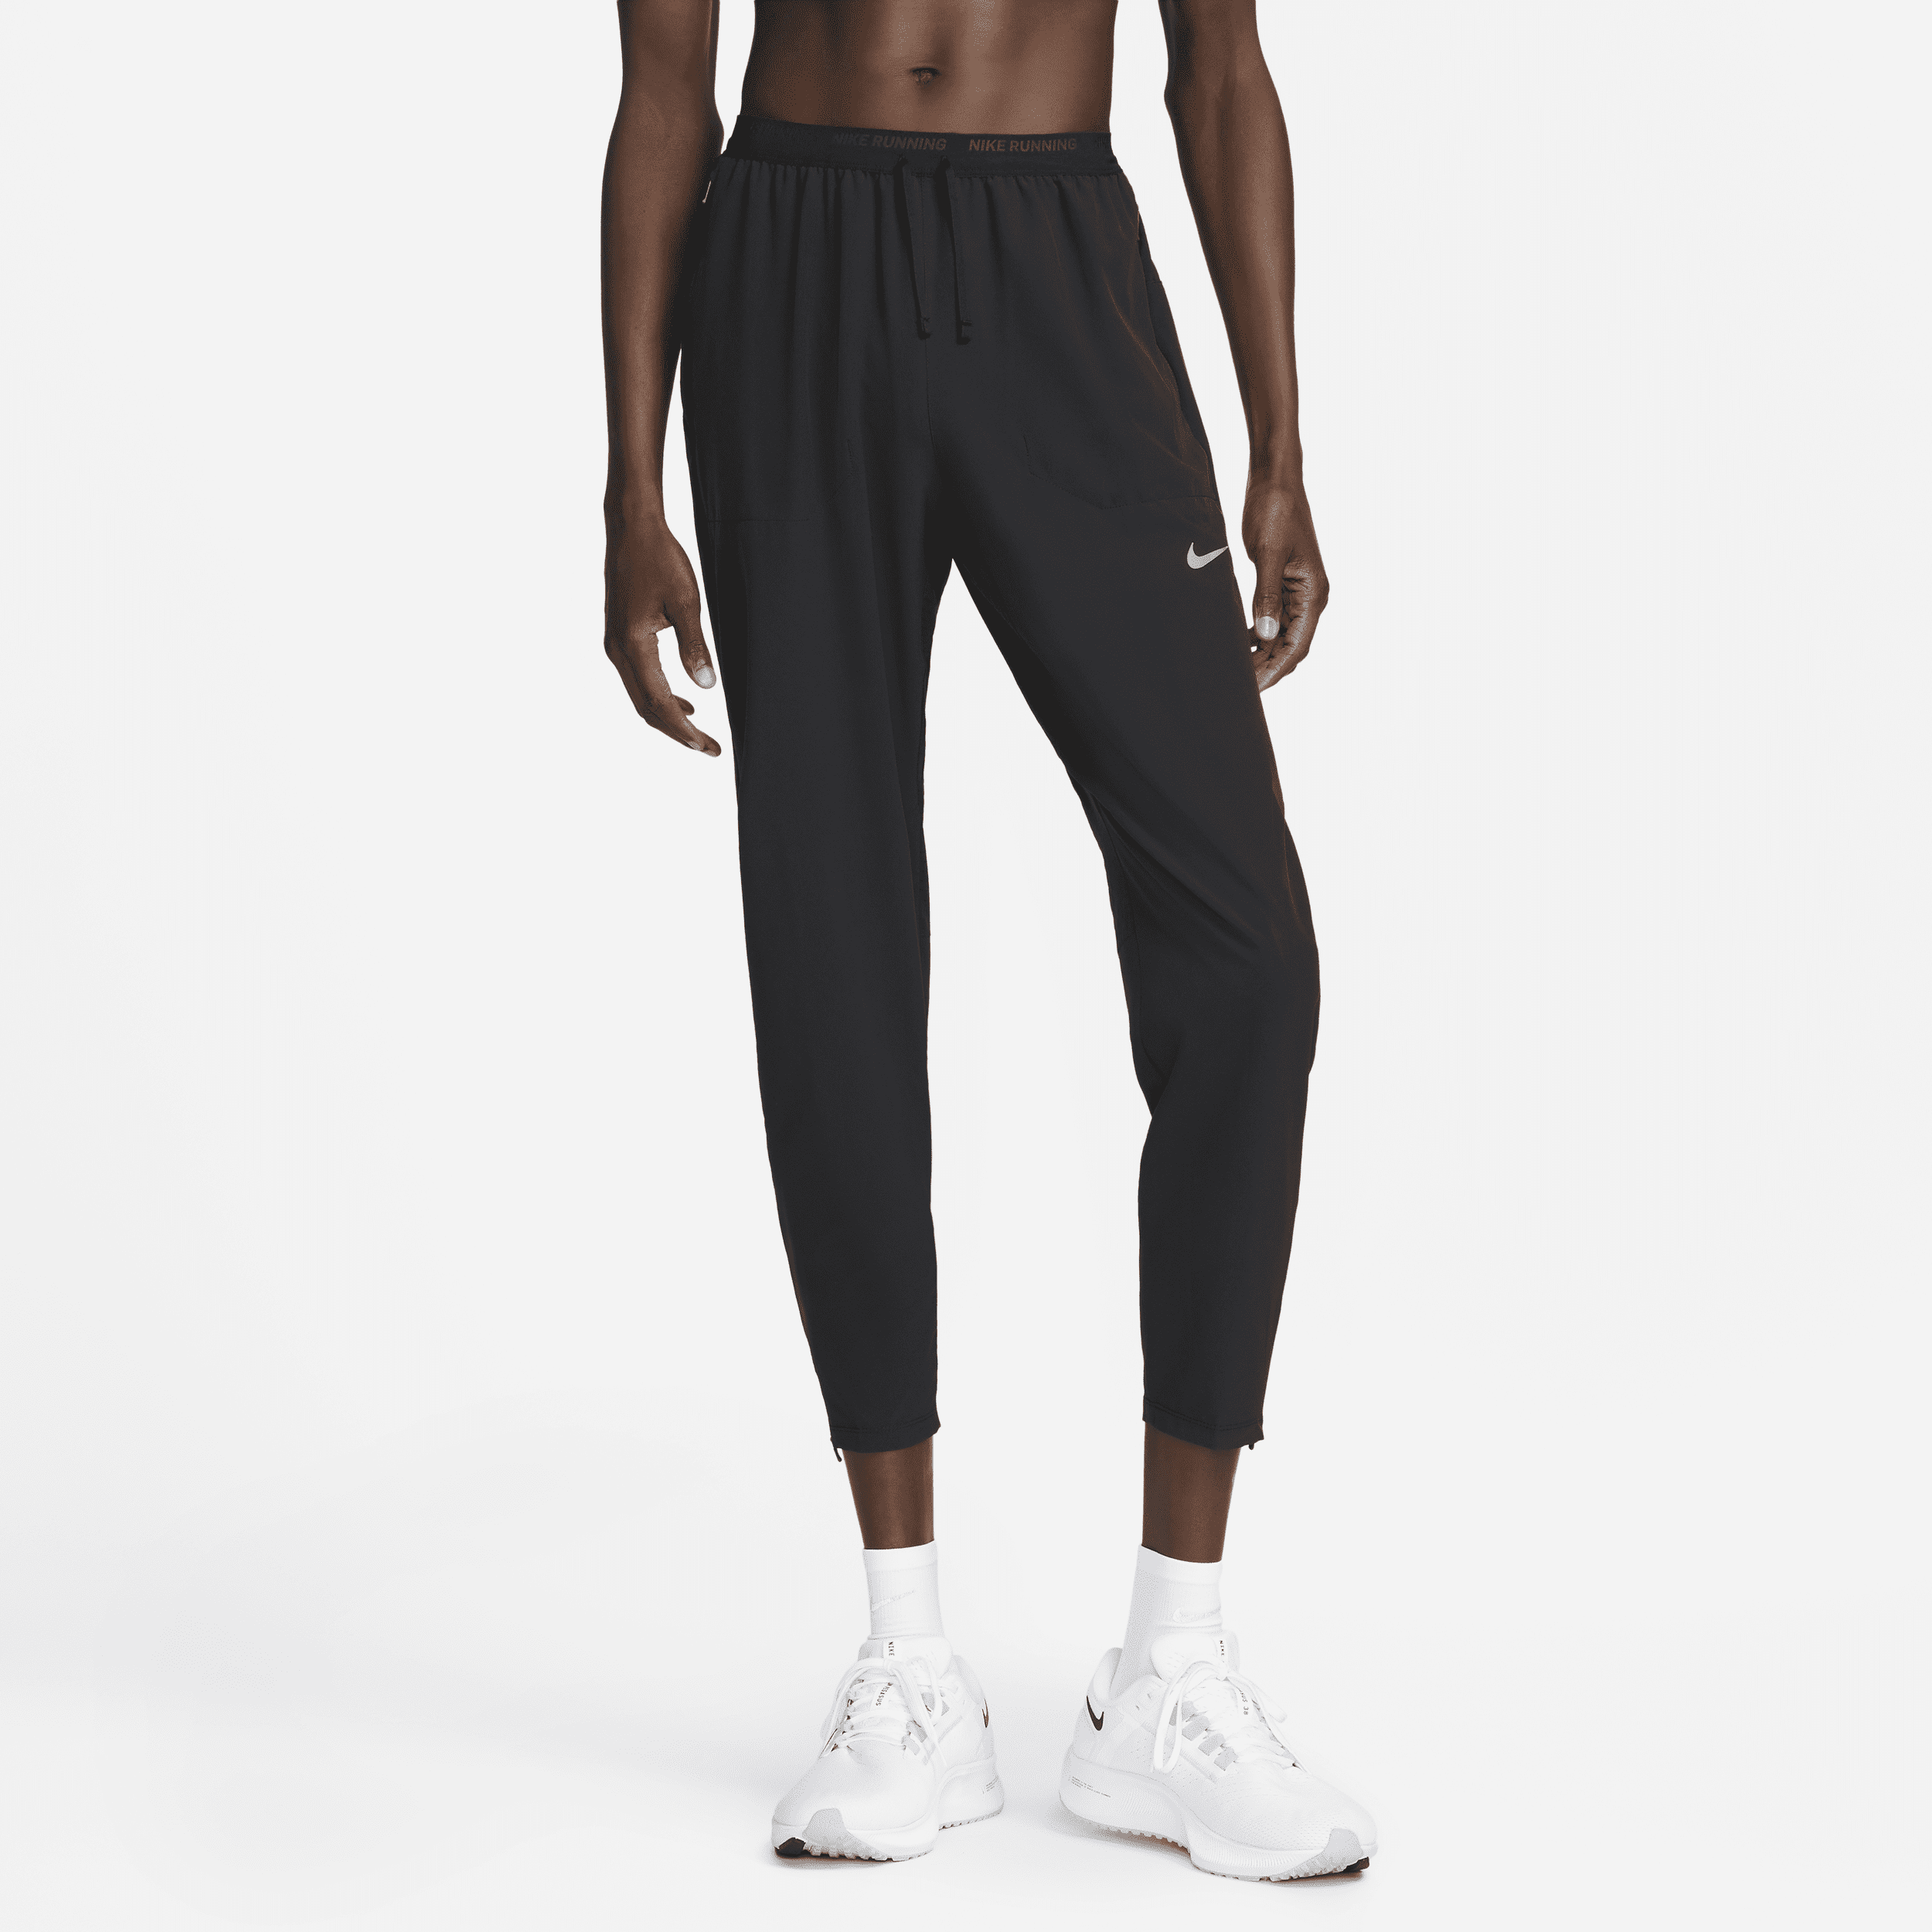 Pantaloni da running in tessuto Dri-FIT Nike Phenom – Uomo - Nero